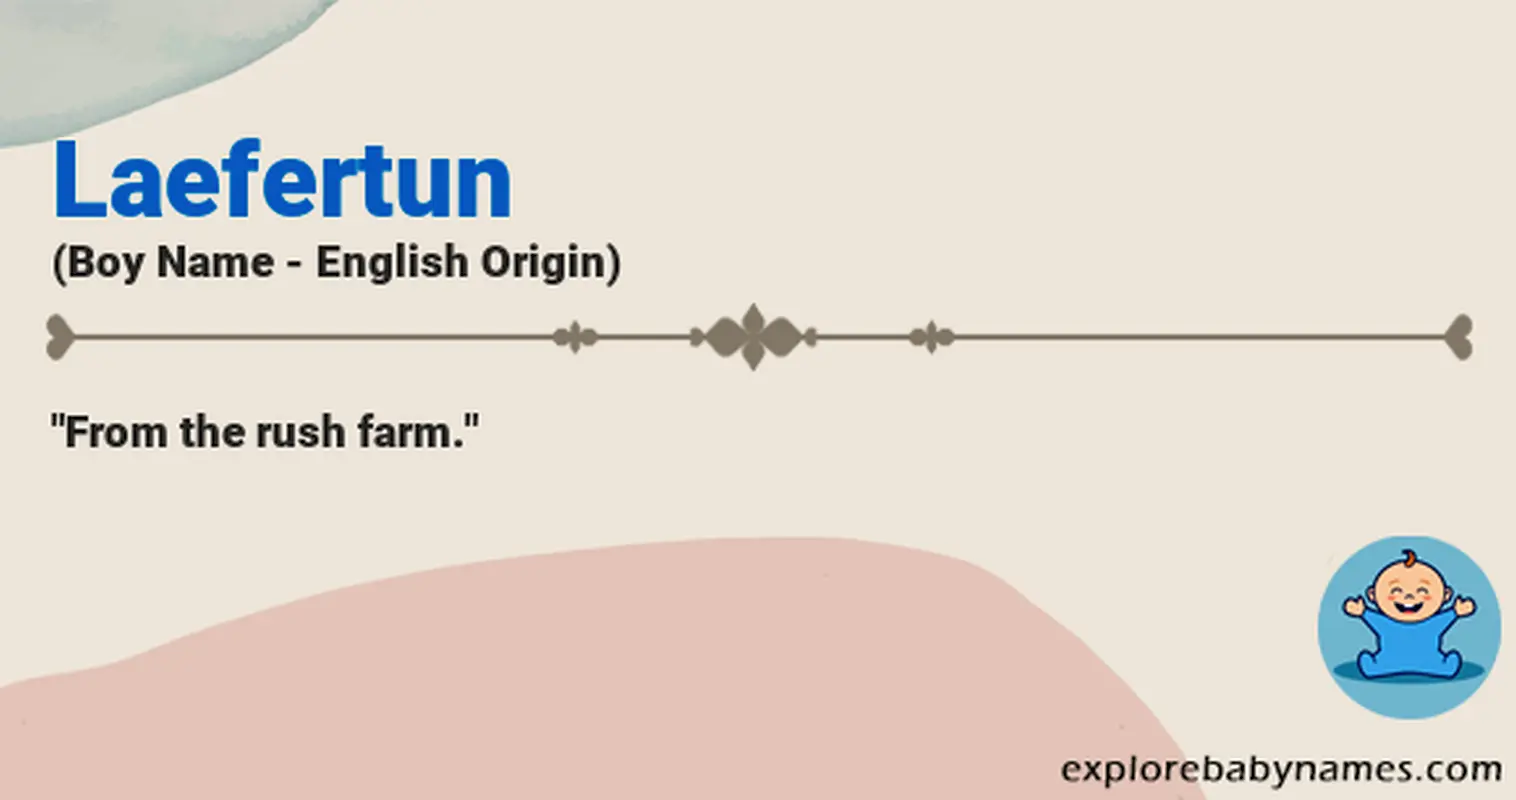 Meaning of Laefertun